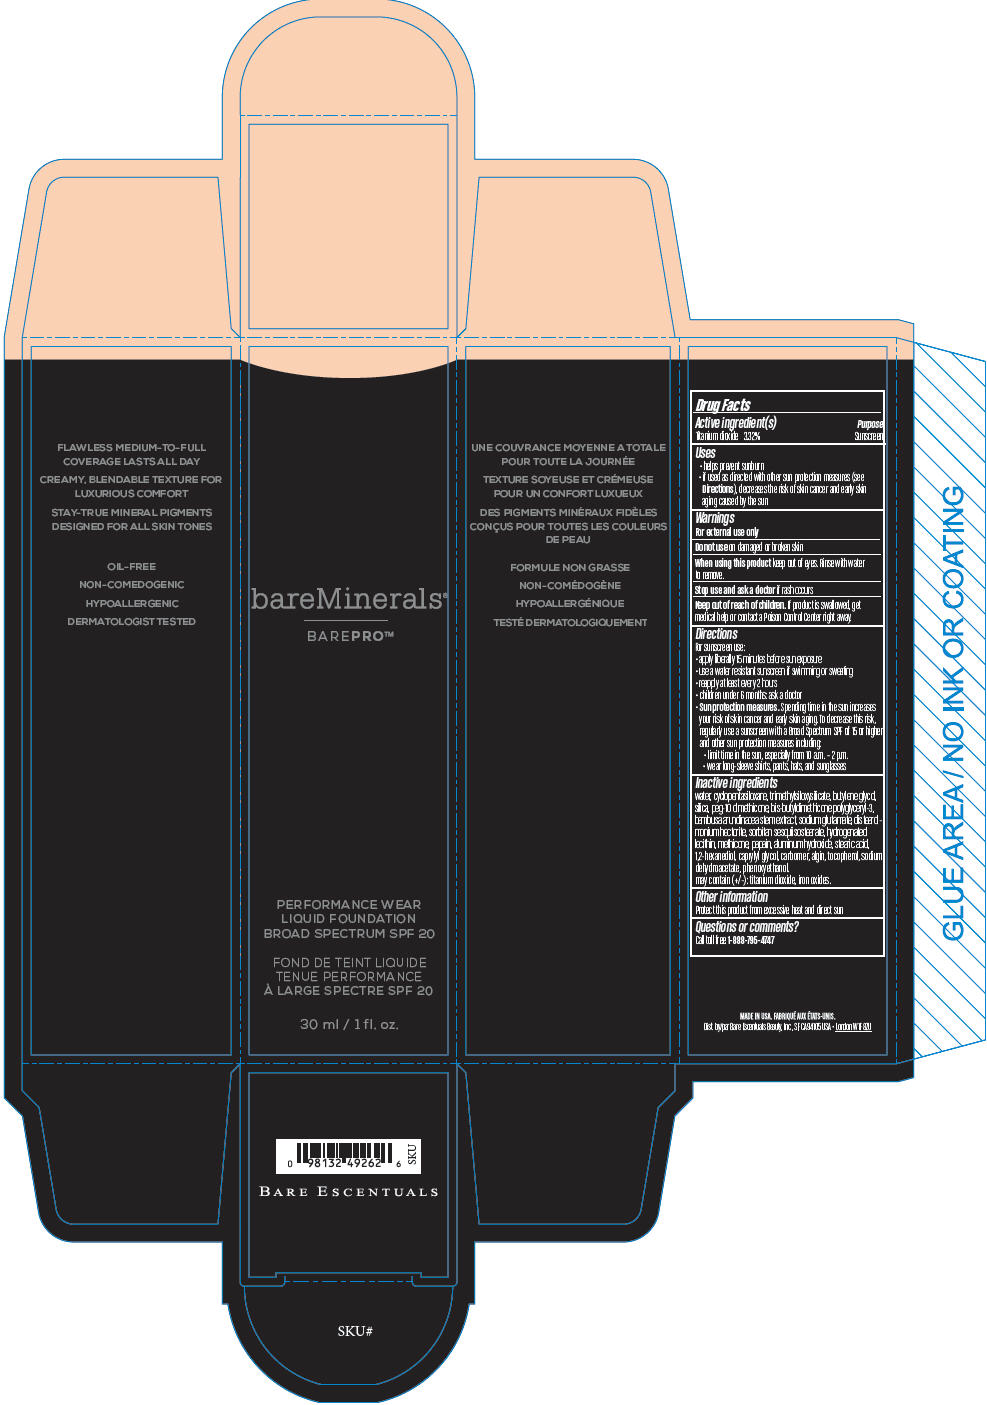 PRINCIPAL DISPLAY PANEL - 30 ml Bottle Carton - Cashmere 06